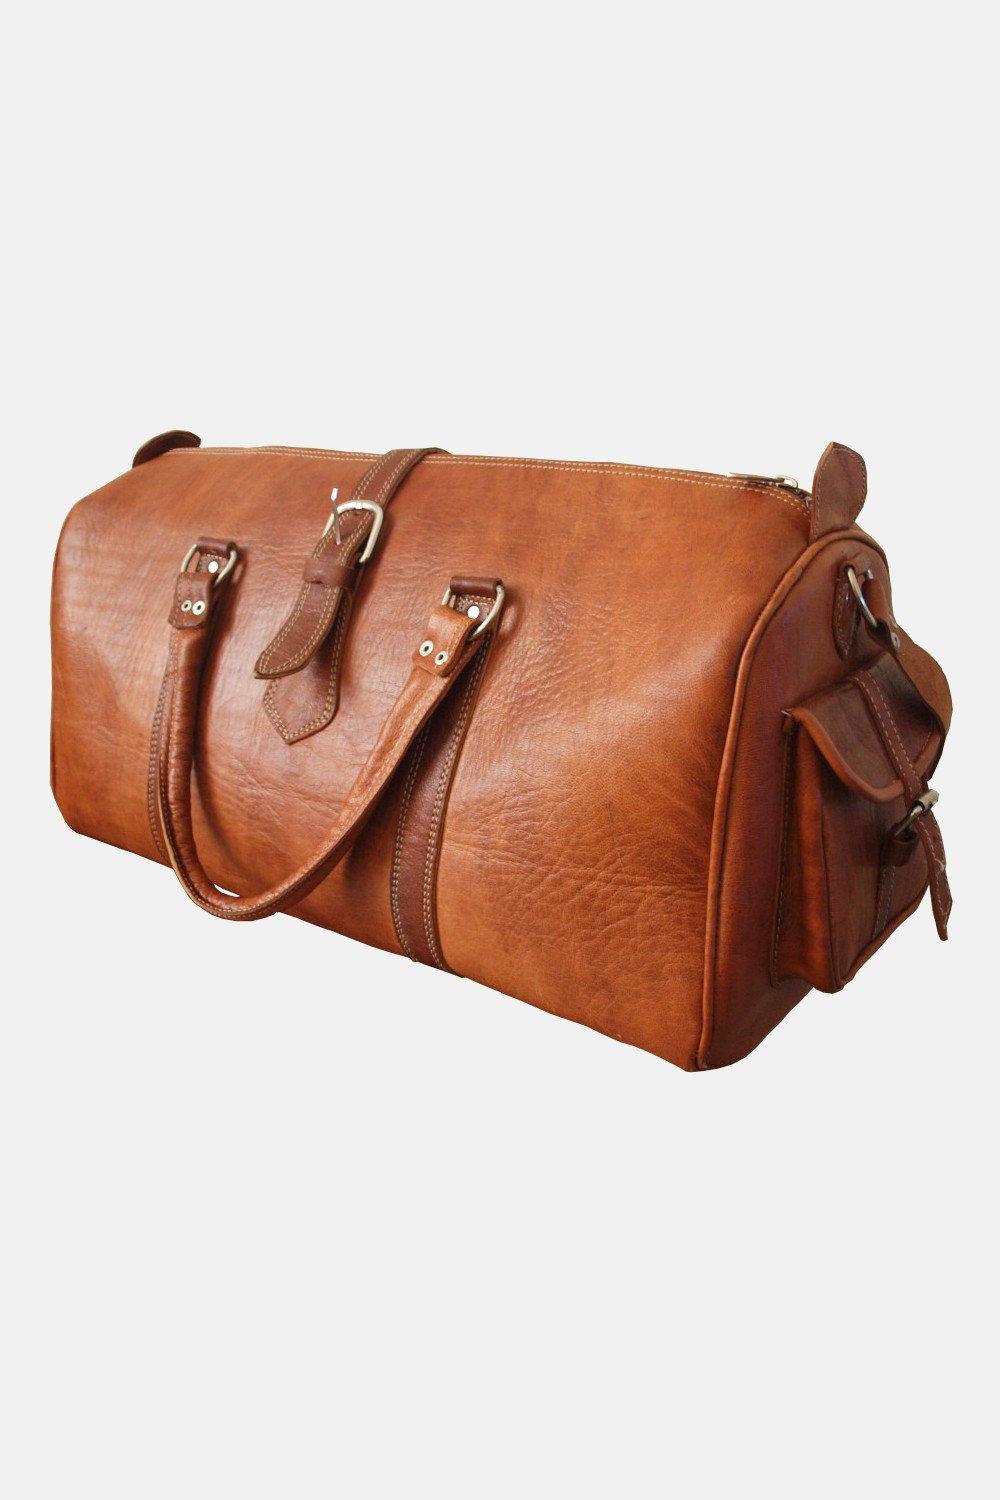 Кожаная ночная сумка 'The Rabat' Berber Leather, коричневый легкая сумка для тарелок bosphorus cymbal bag